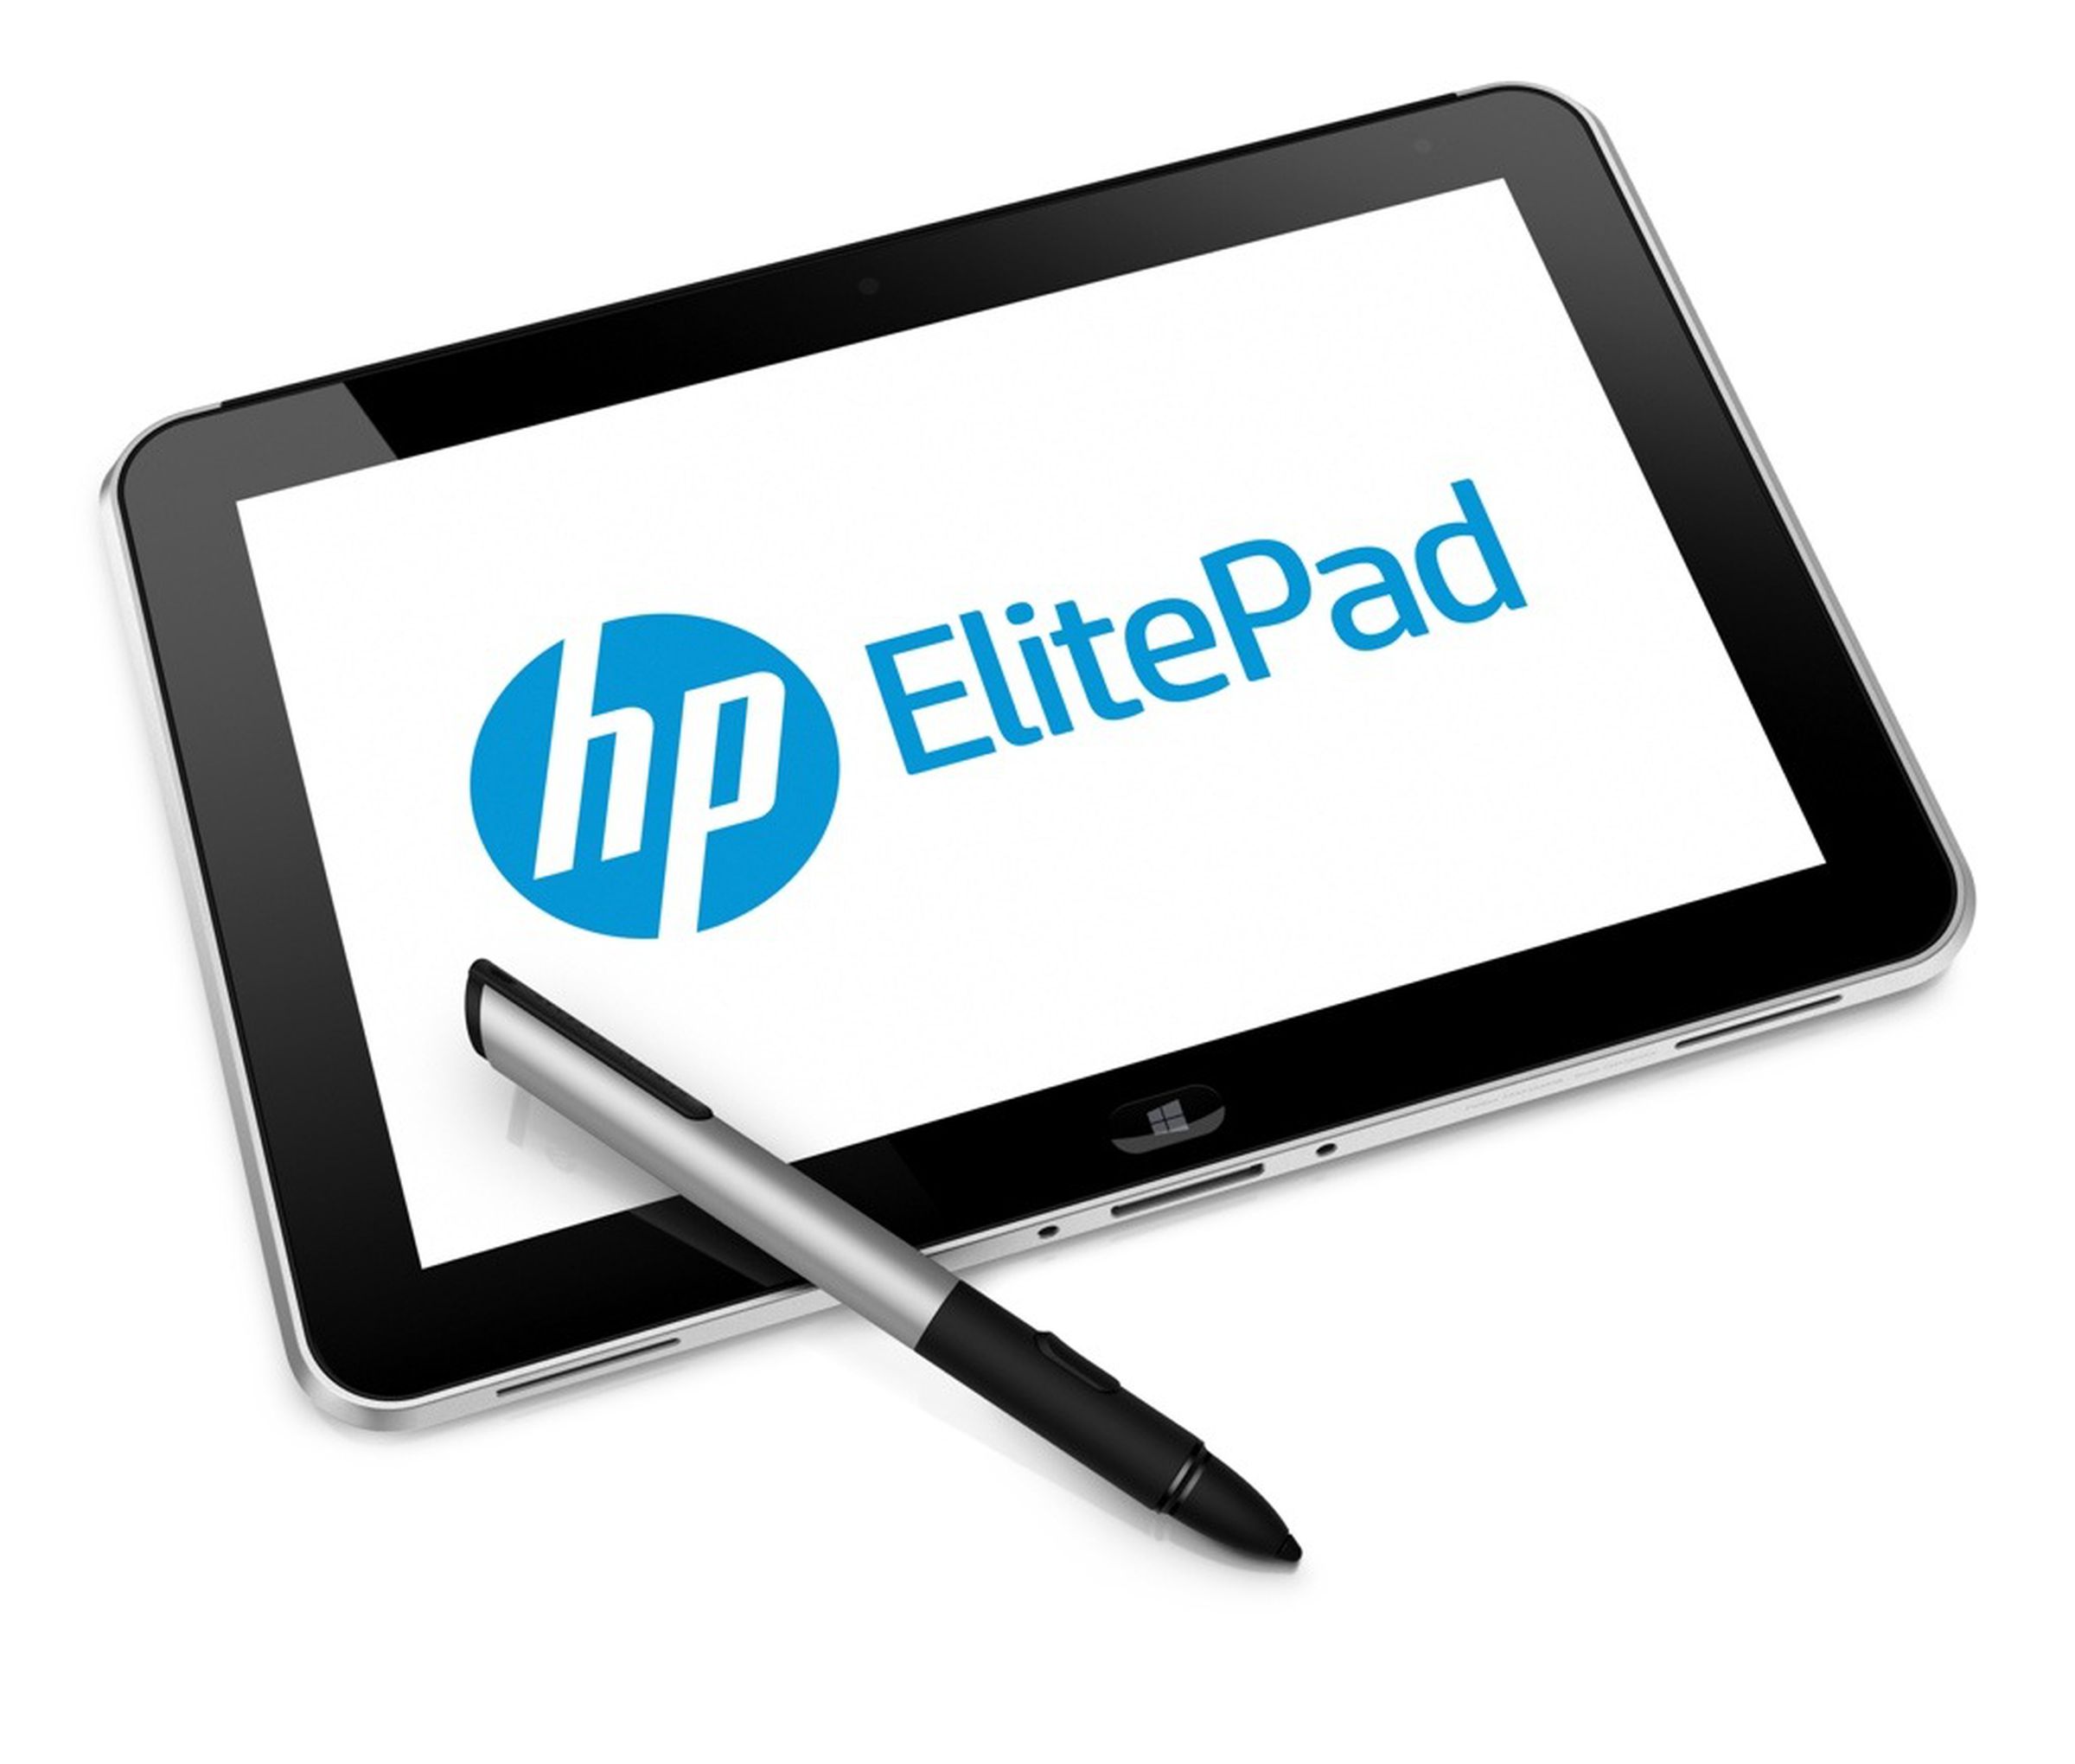 HP ElitePad 900 official photos